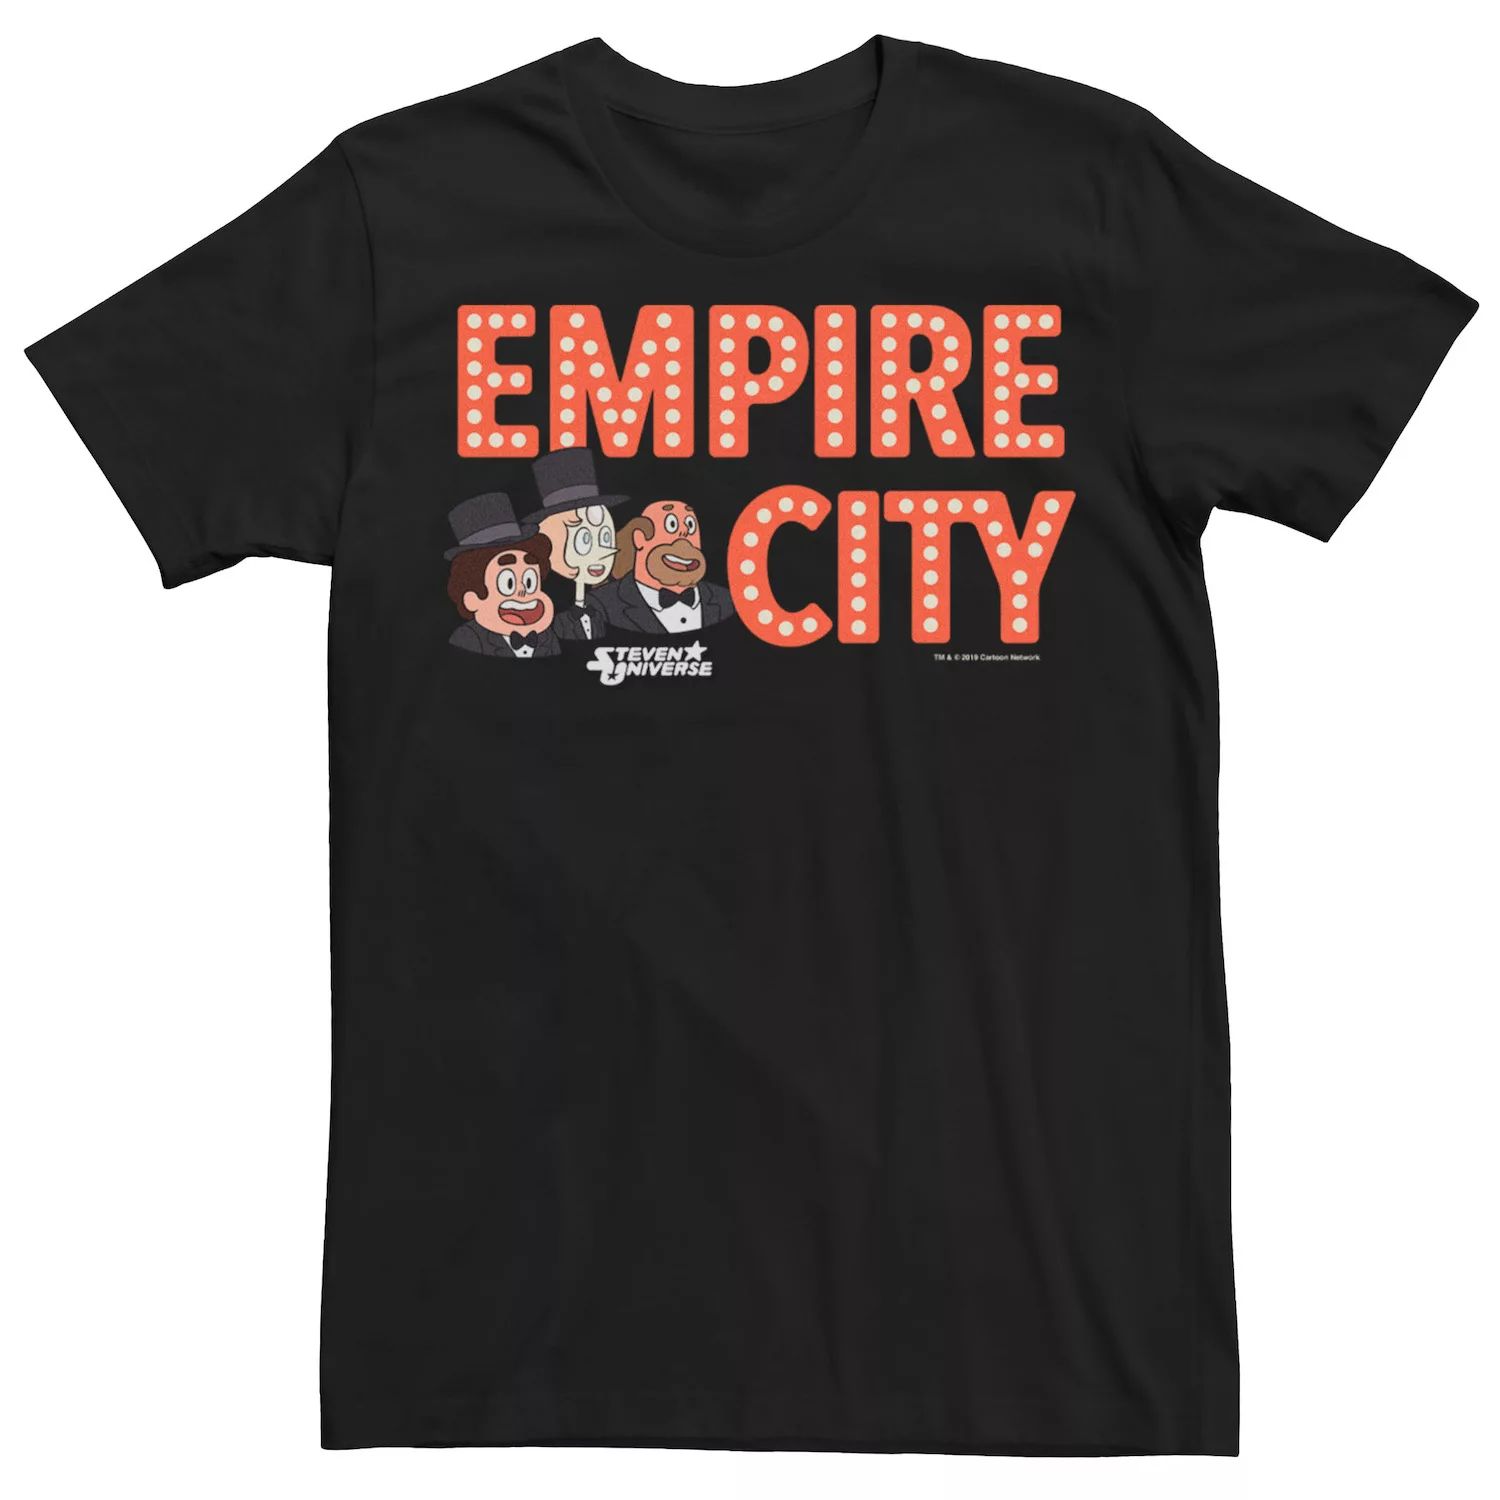 Мужская футболка с логотипом Cartoon Network Steven Universe Empire City Licensed Character